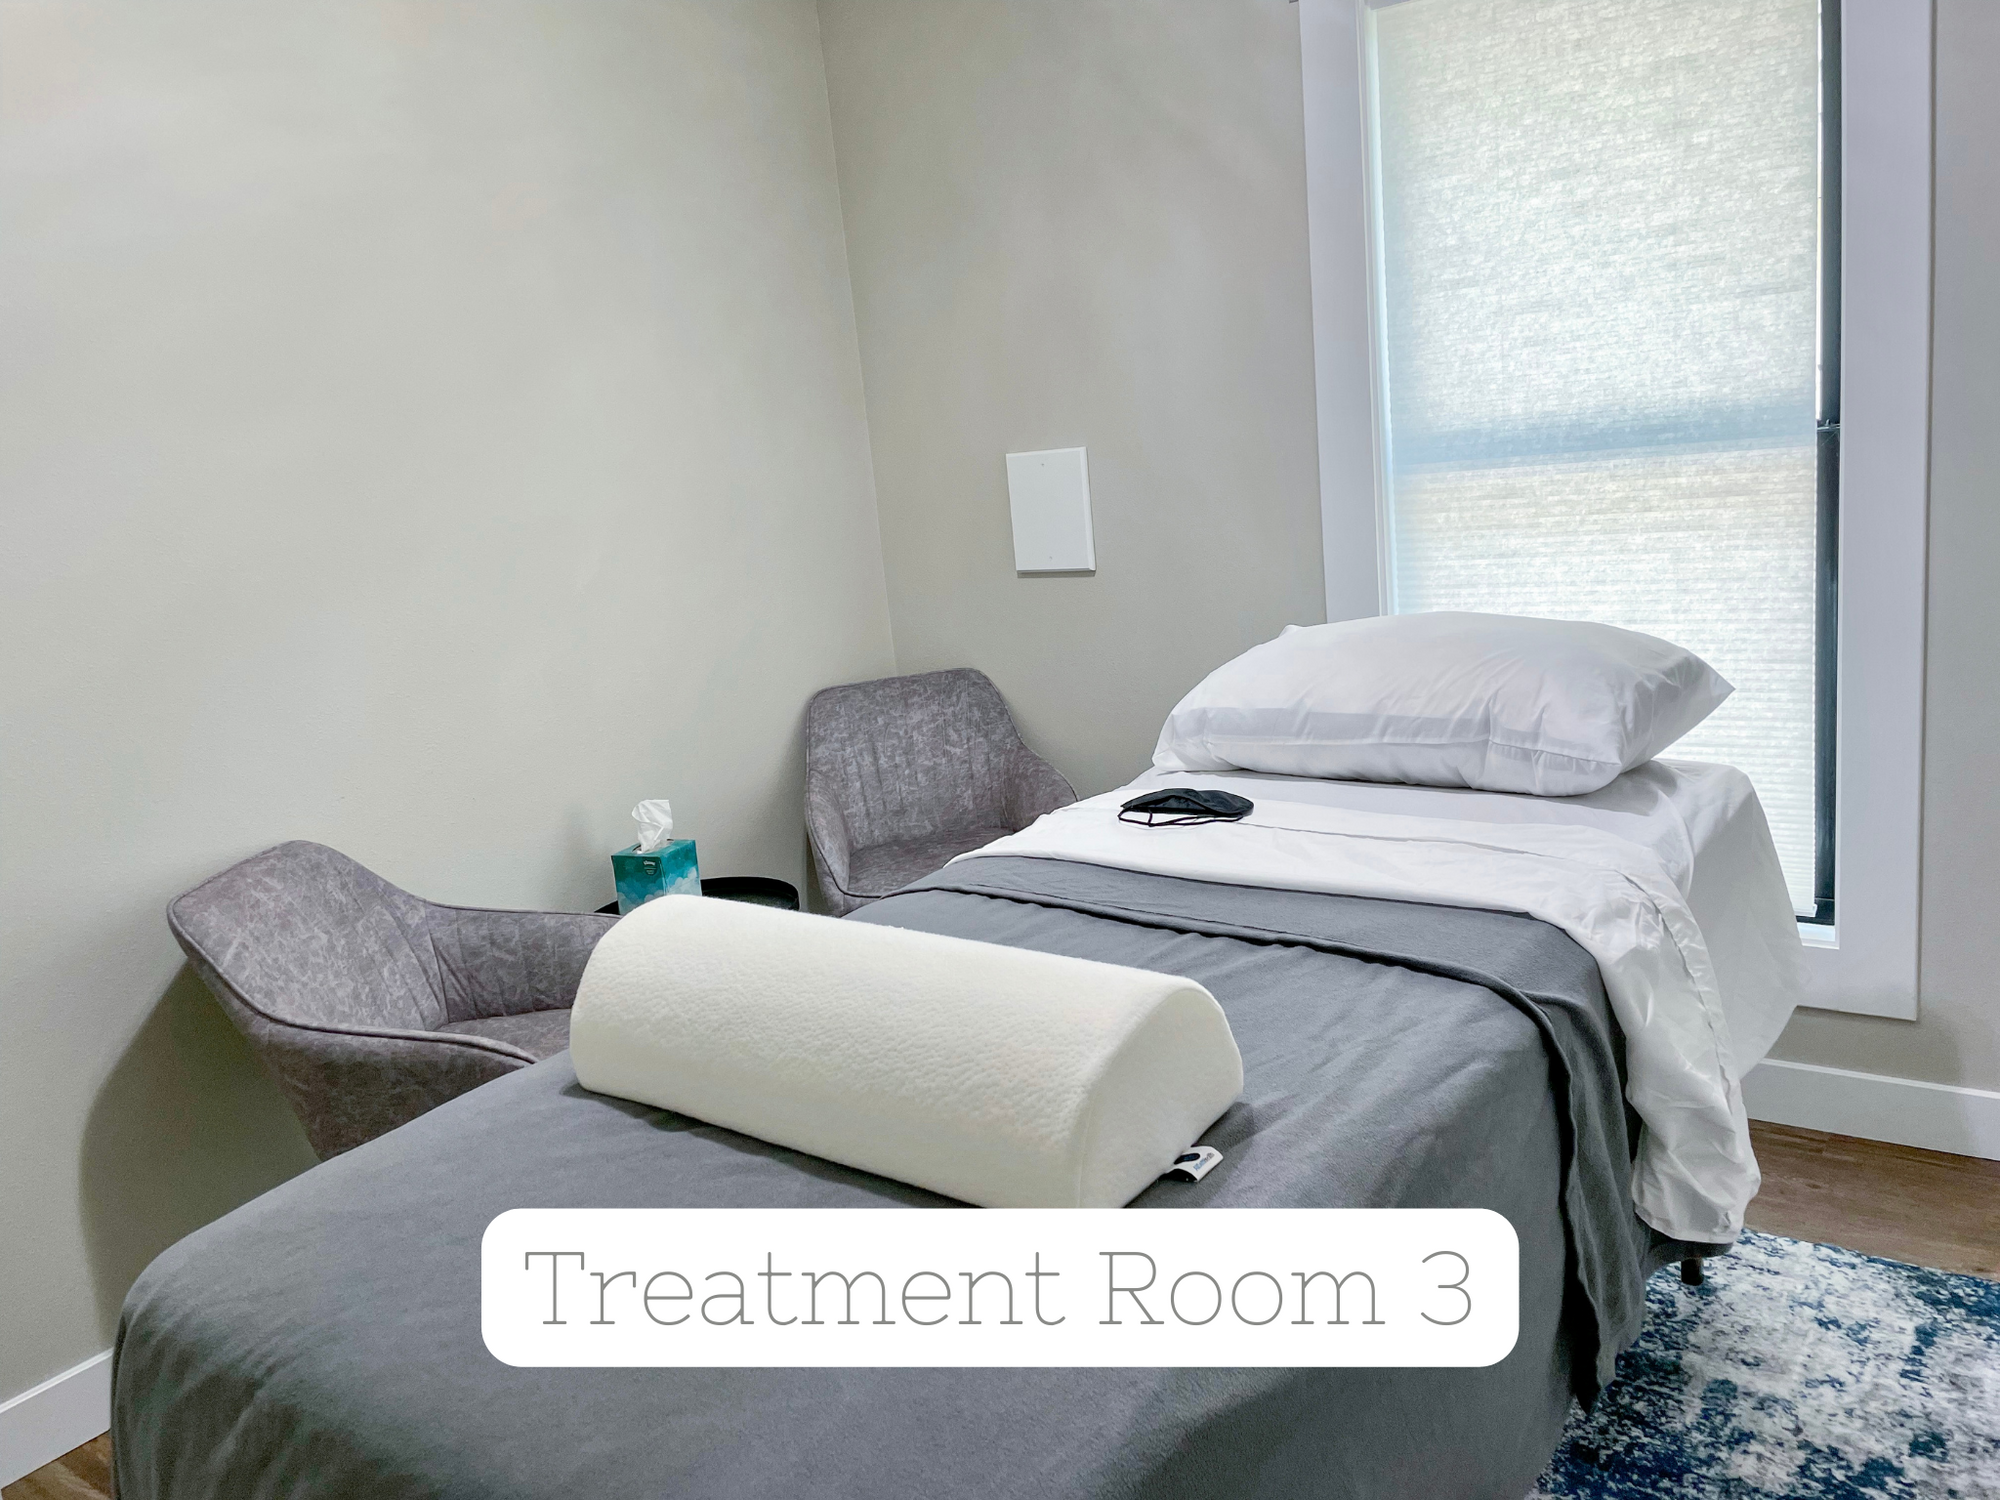 Weekday Treatment Room Rental - Room 3